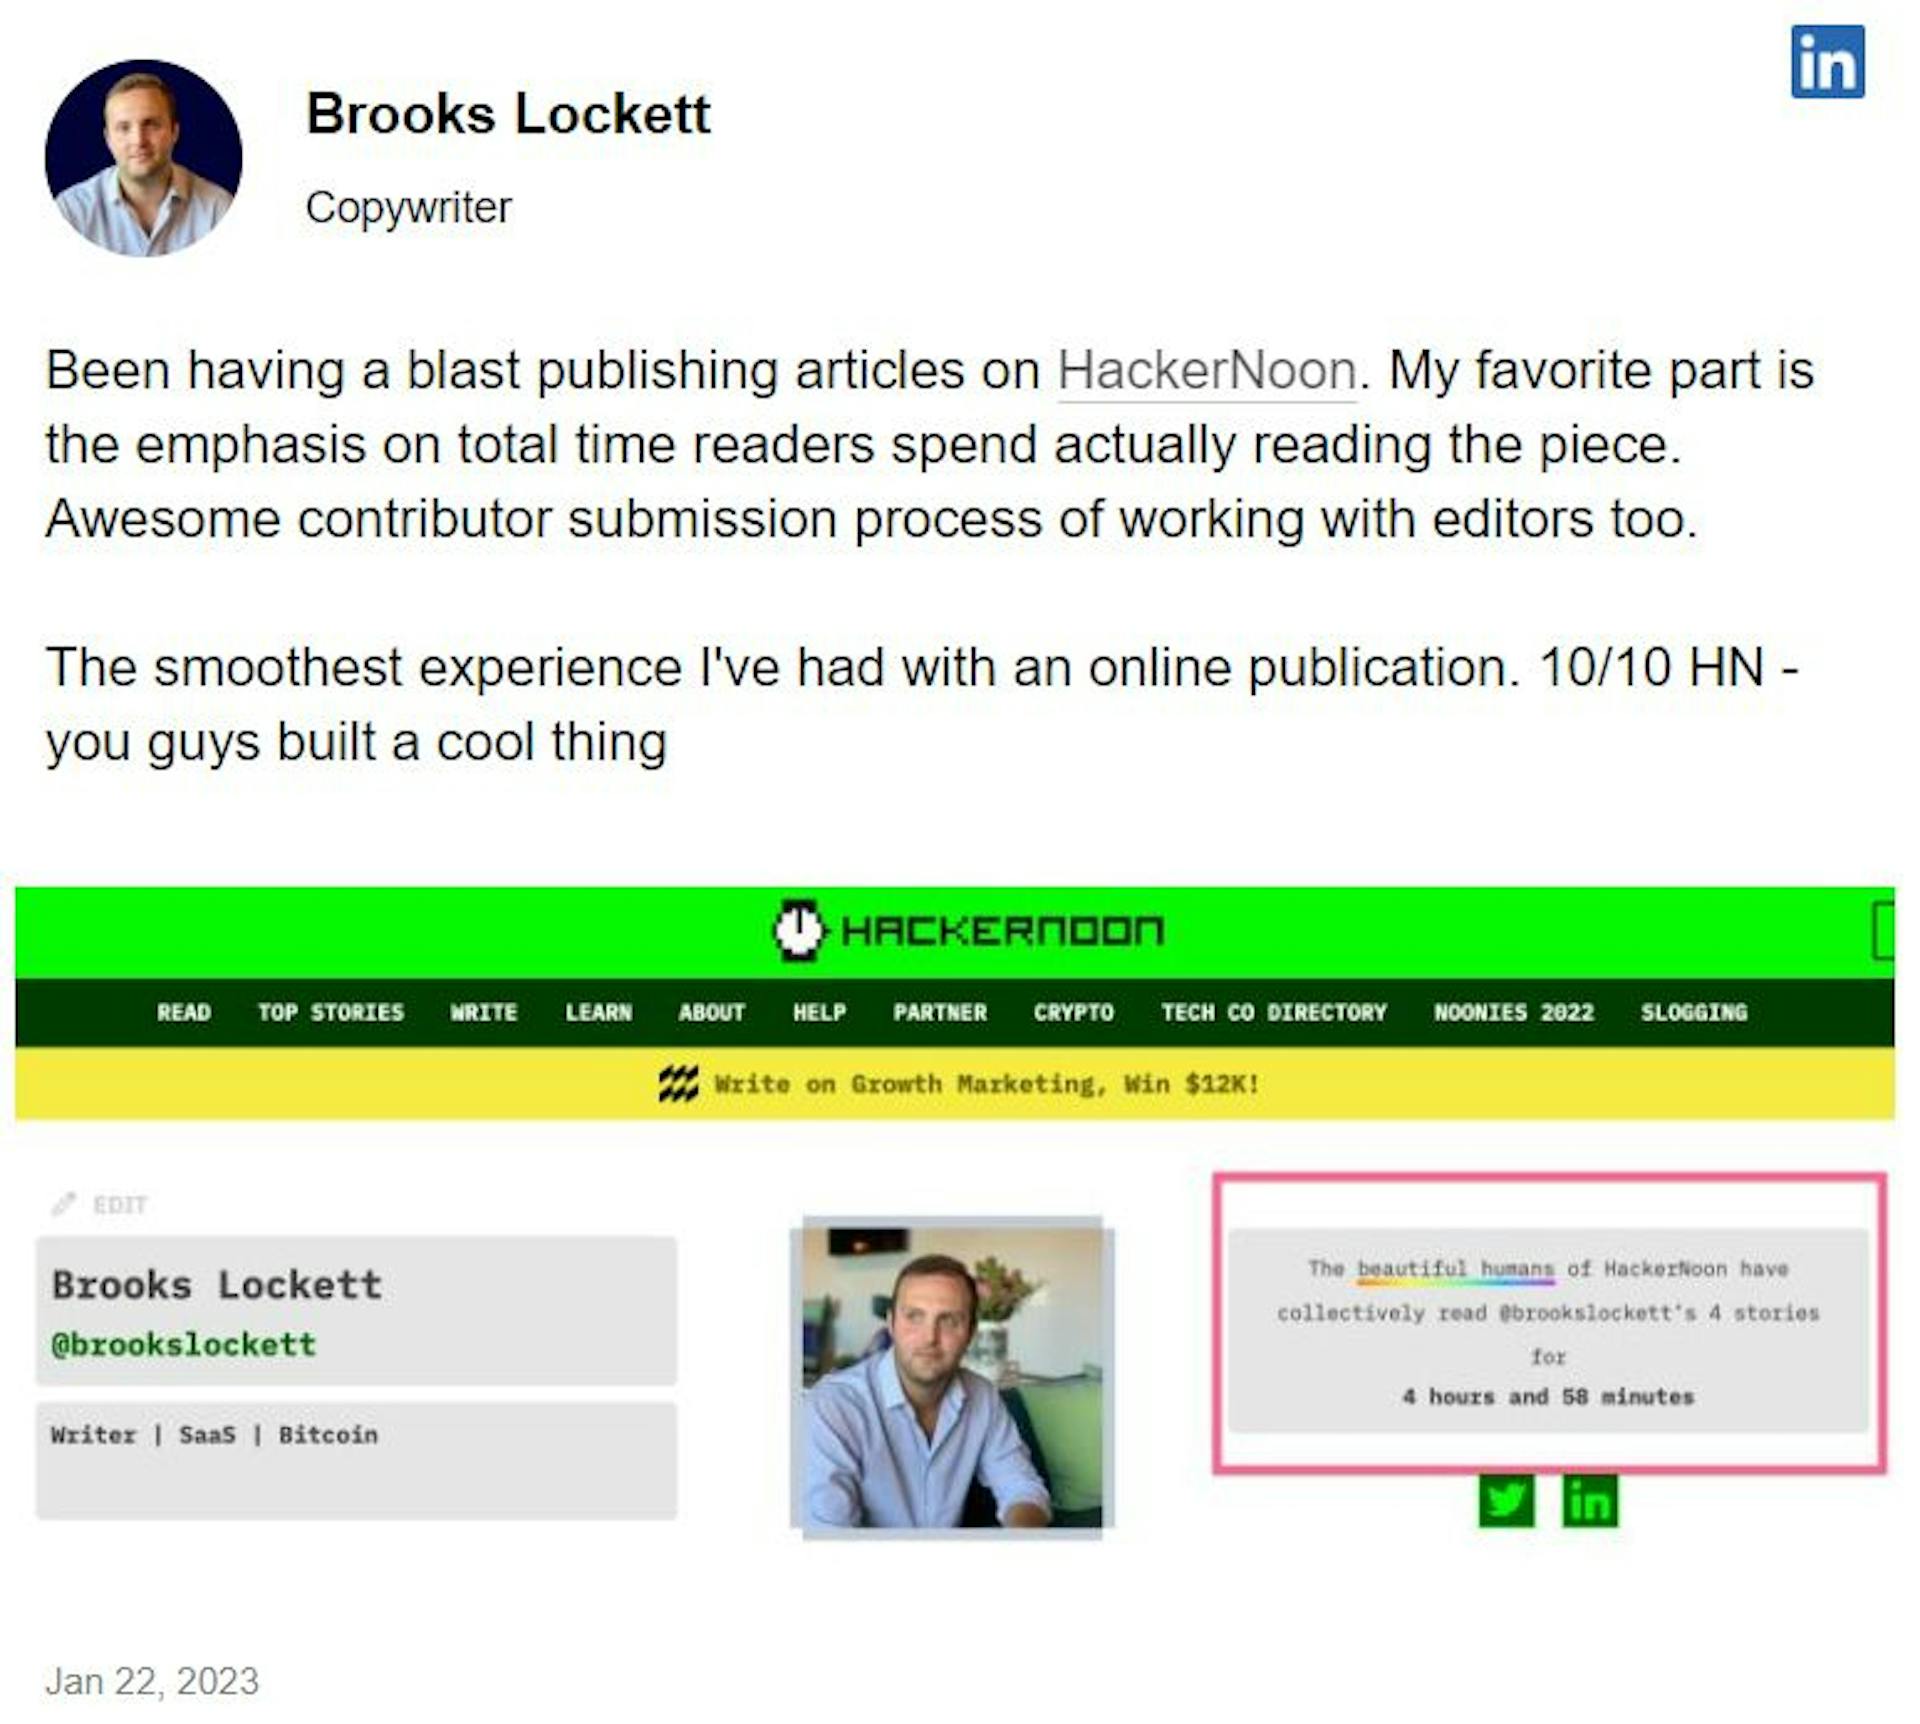 Testemunho de Brooks Lockett no HackerNoon, janeiro de 2023.